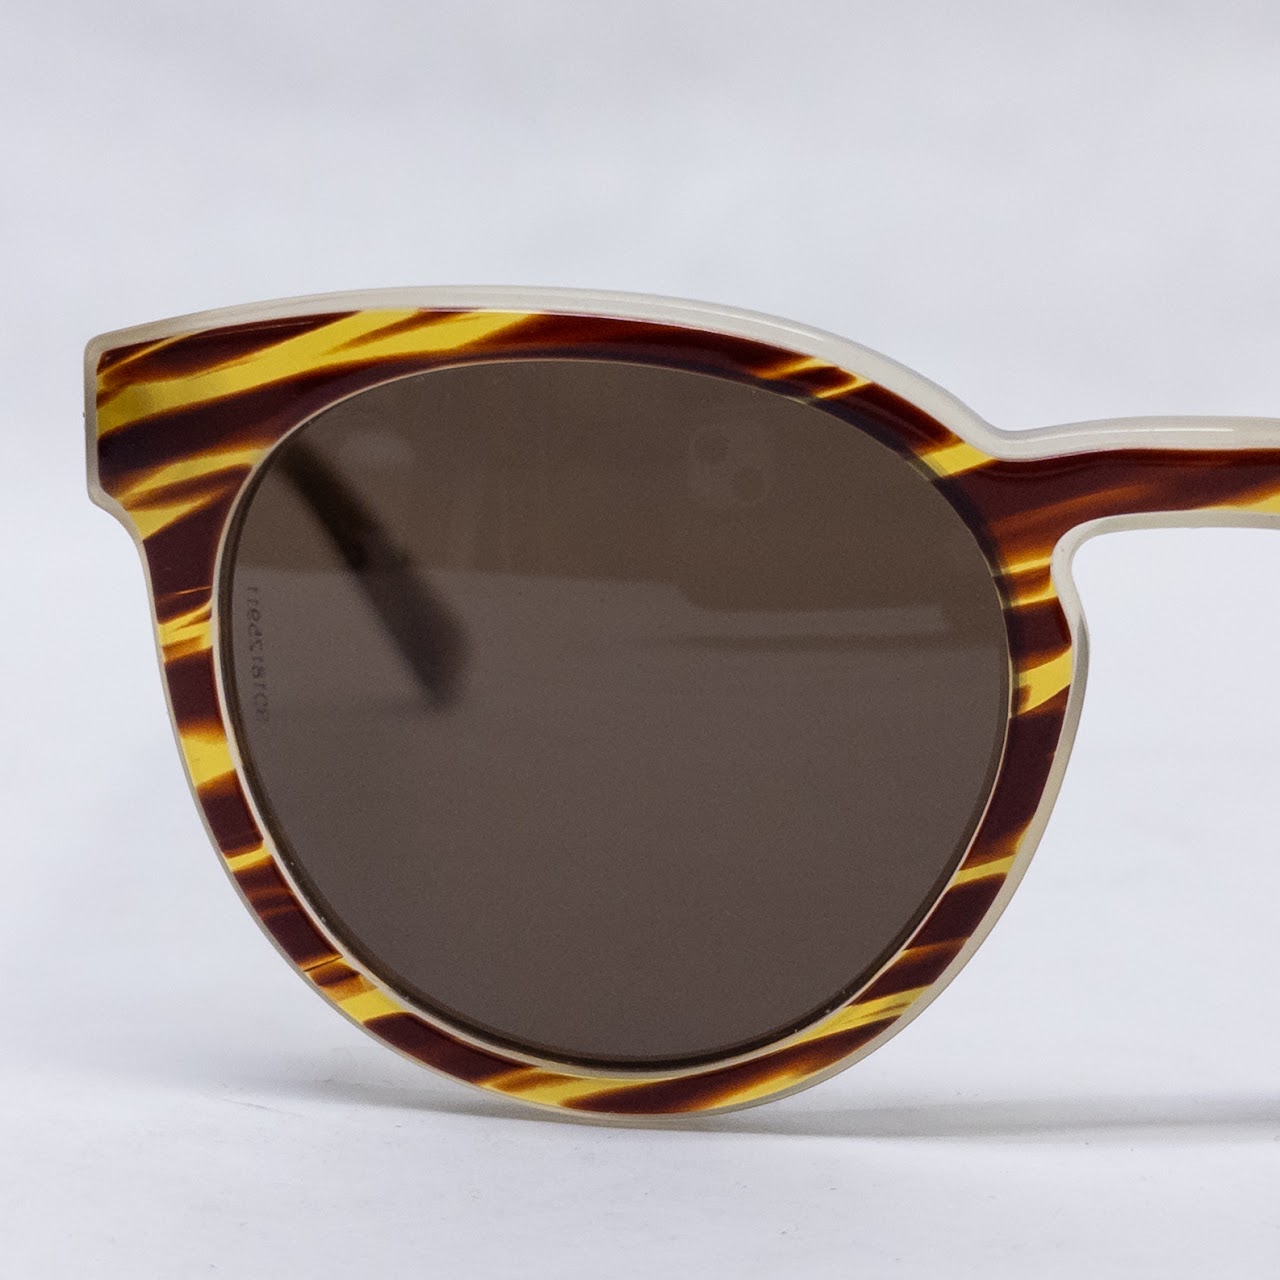 Dolce & Gabbana Havana Brown Sunglasses